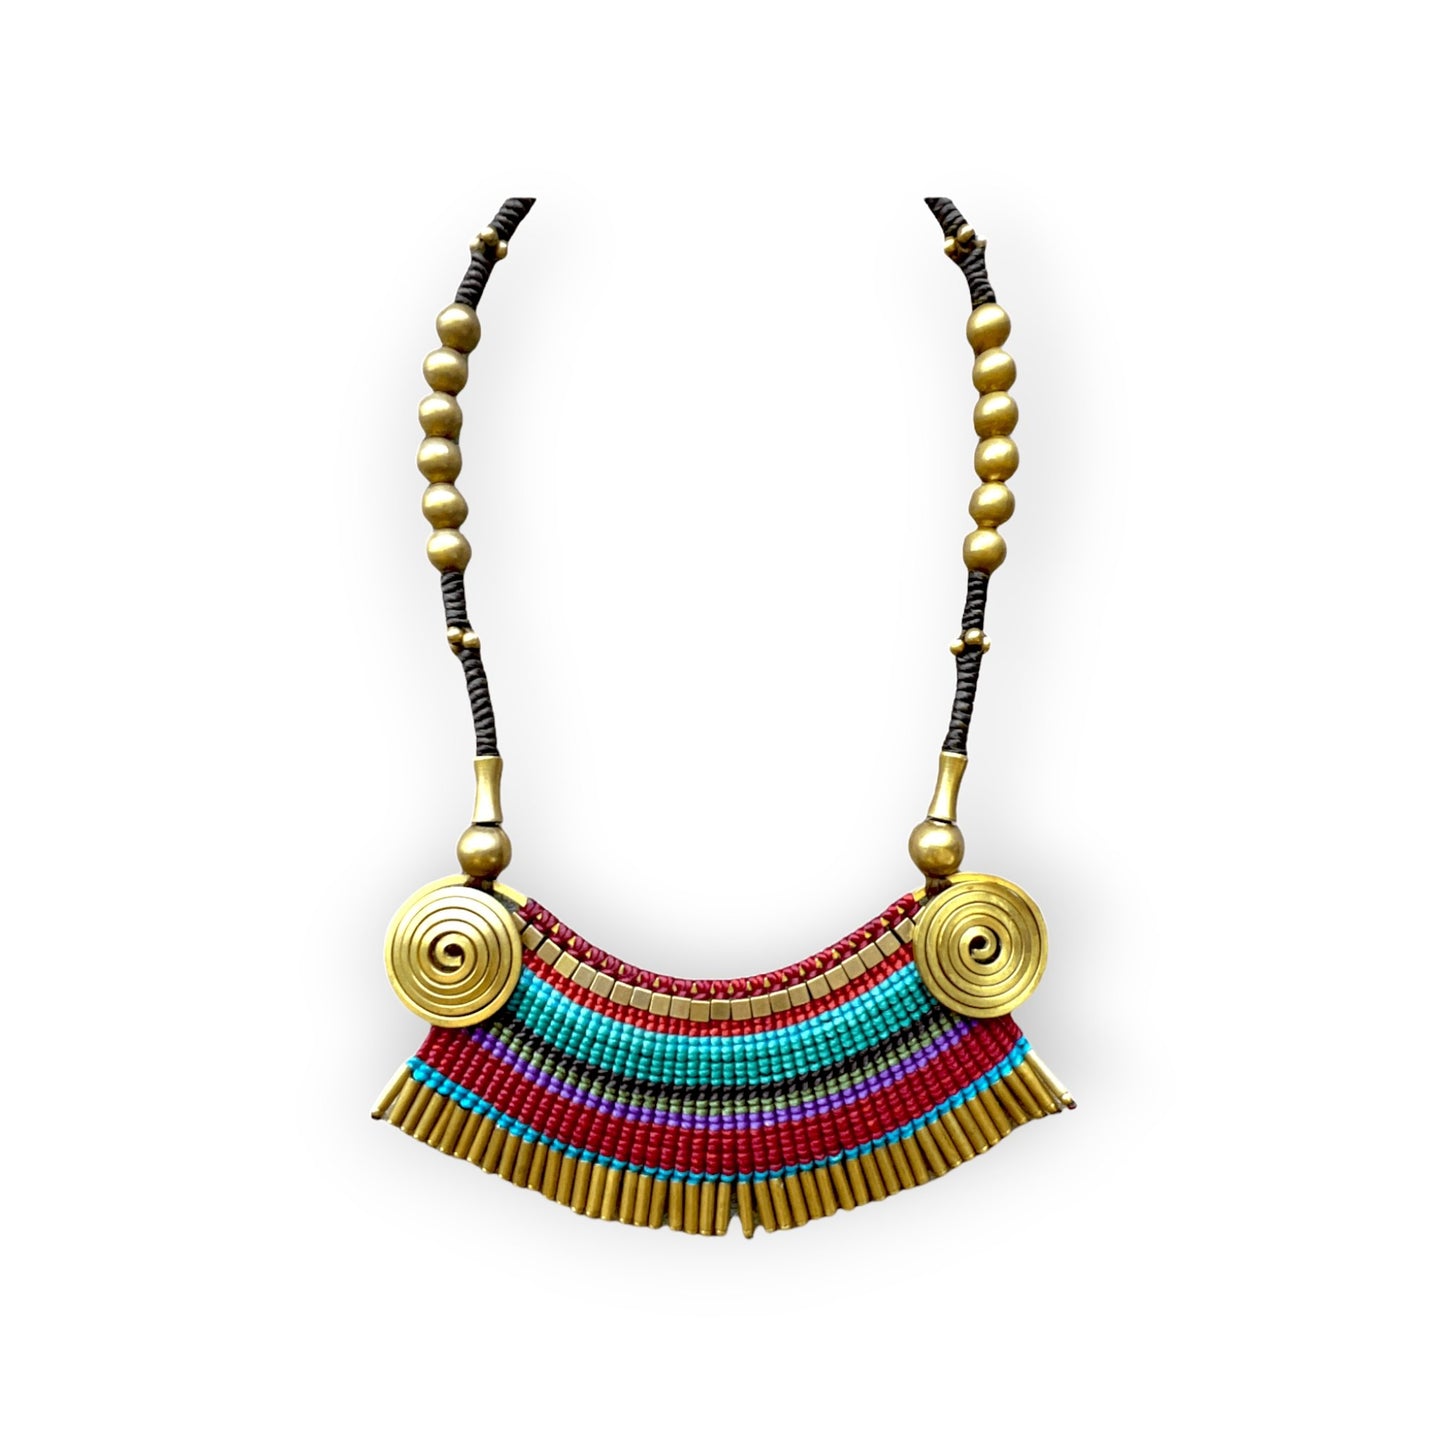 Tribal multi-colored beaded necklace - Sundara Joon